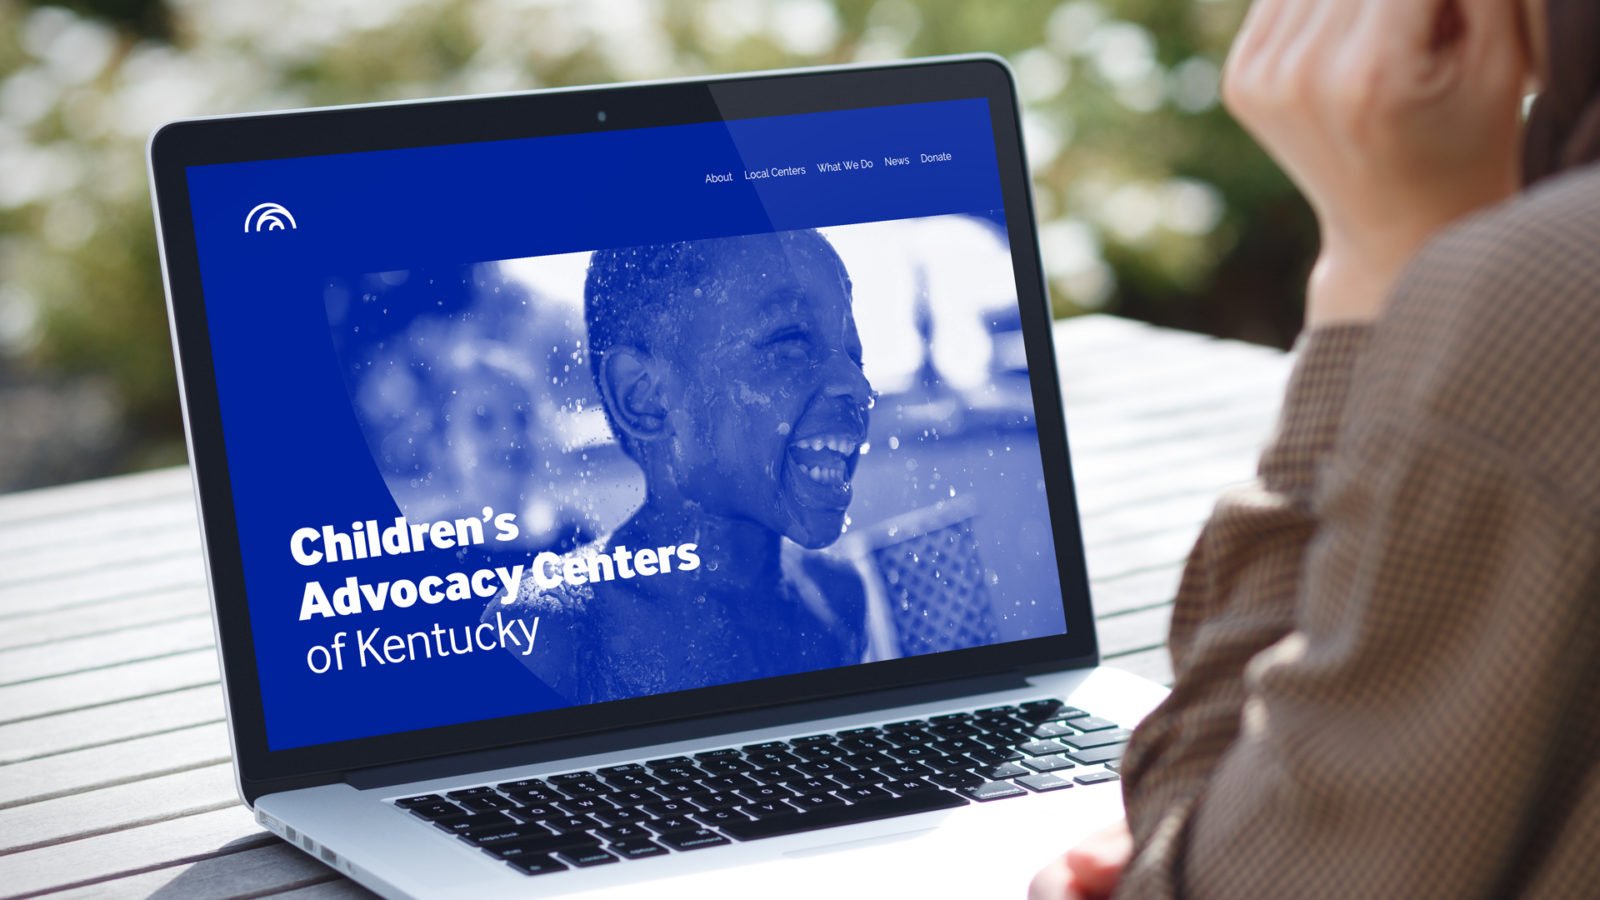 Children’s Advocacy Centers of Kentucky